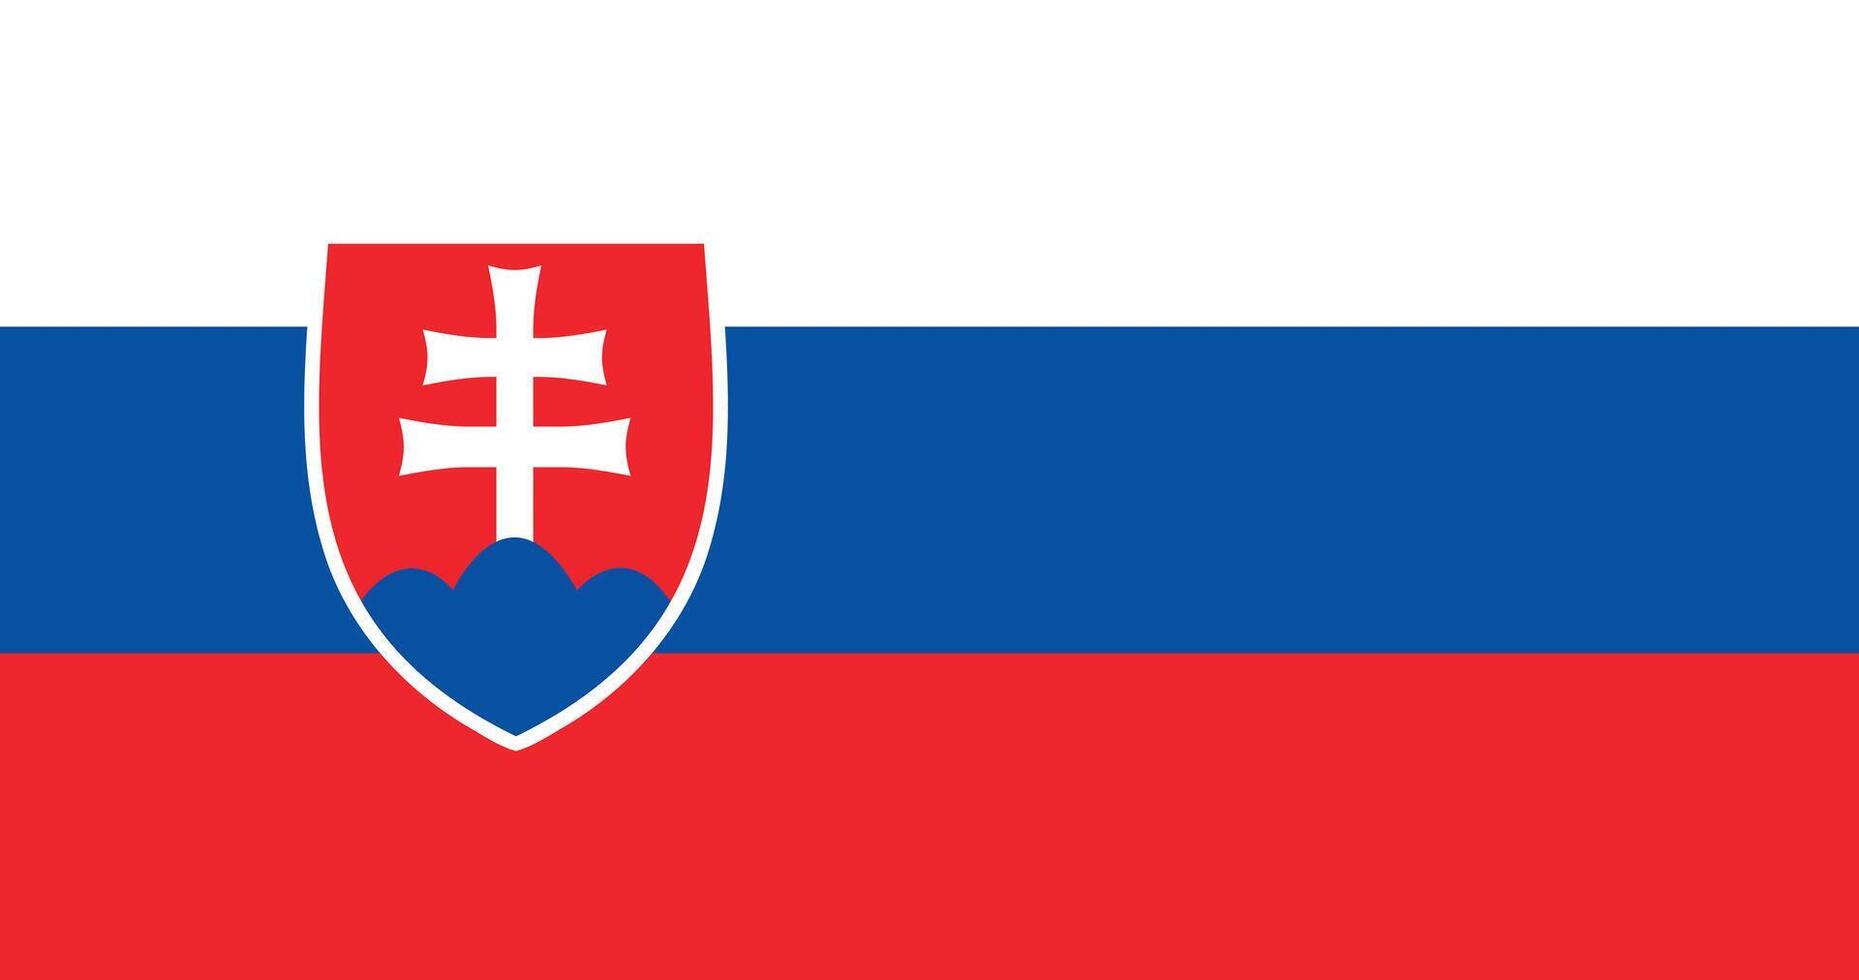 vlak illustratie van Slowakije nationaal vlag. Slowakije vlag ontwerp. vector